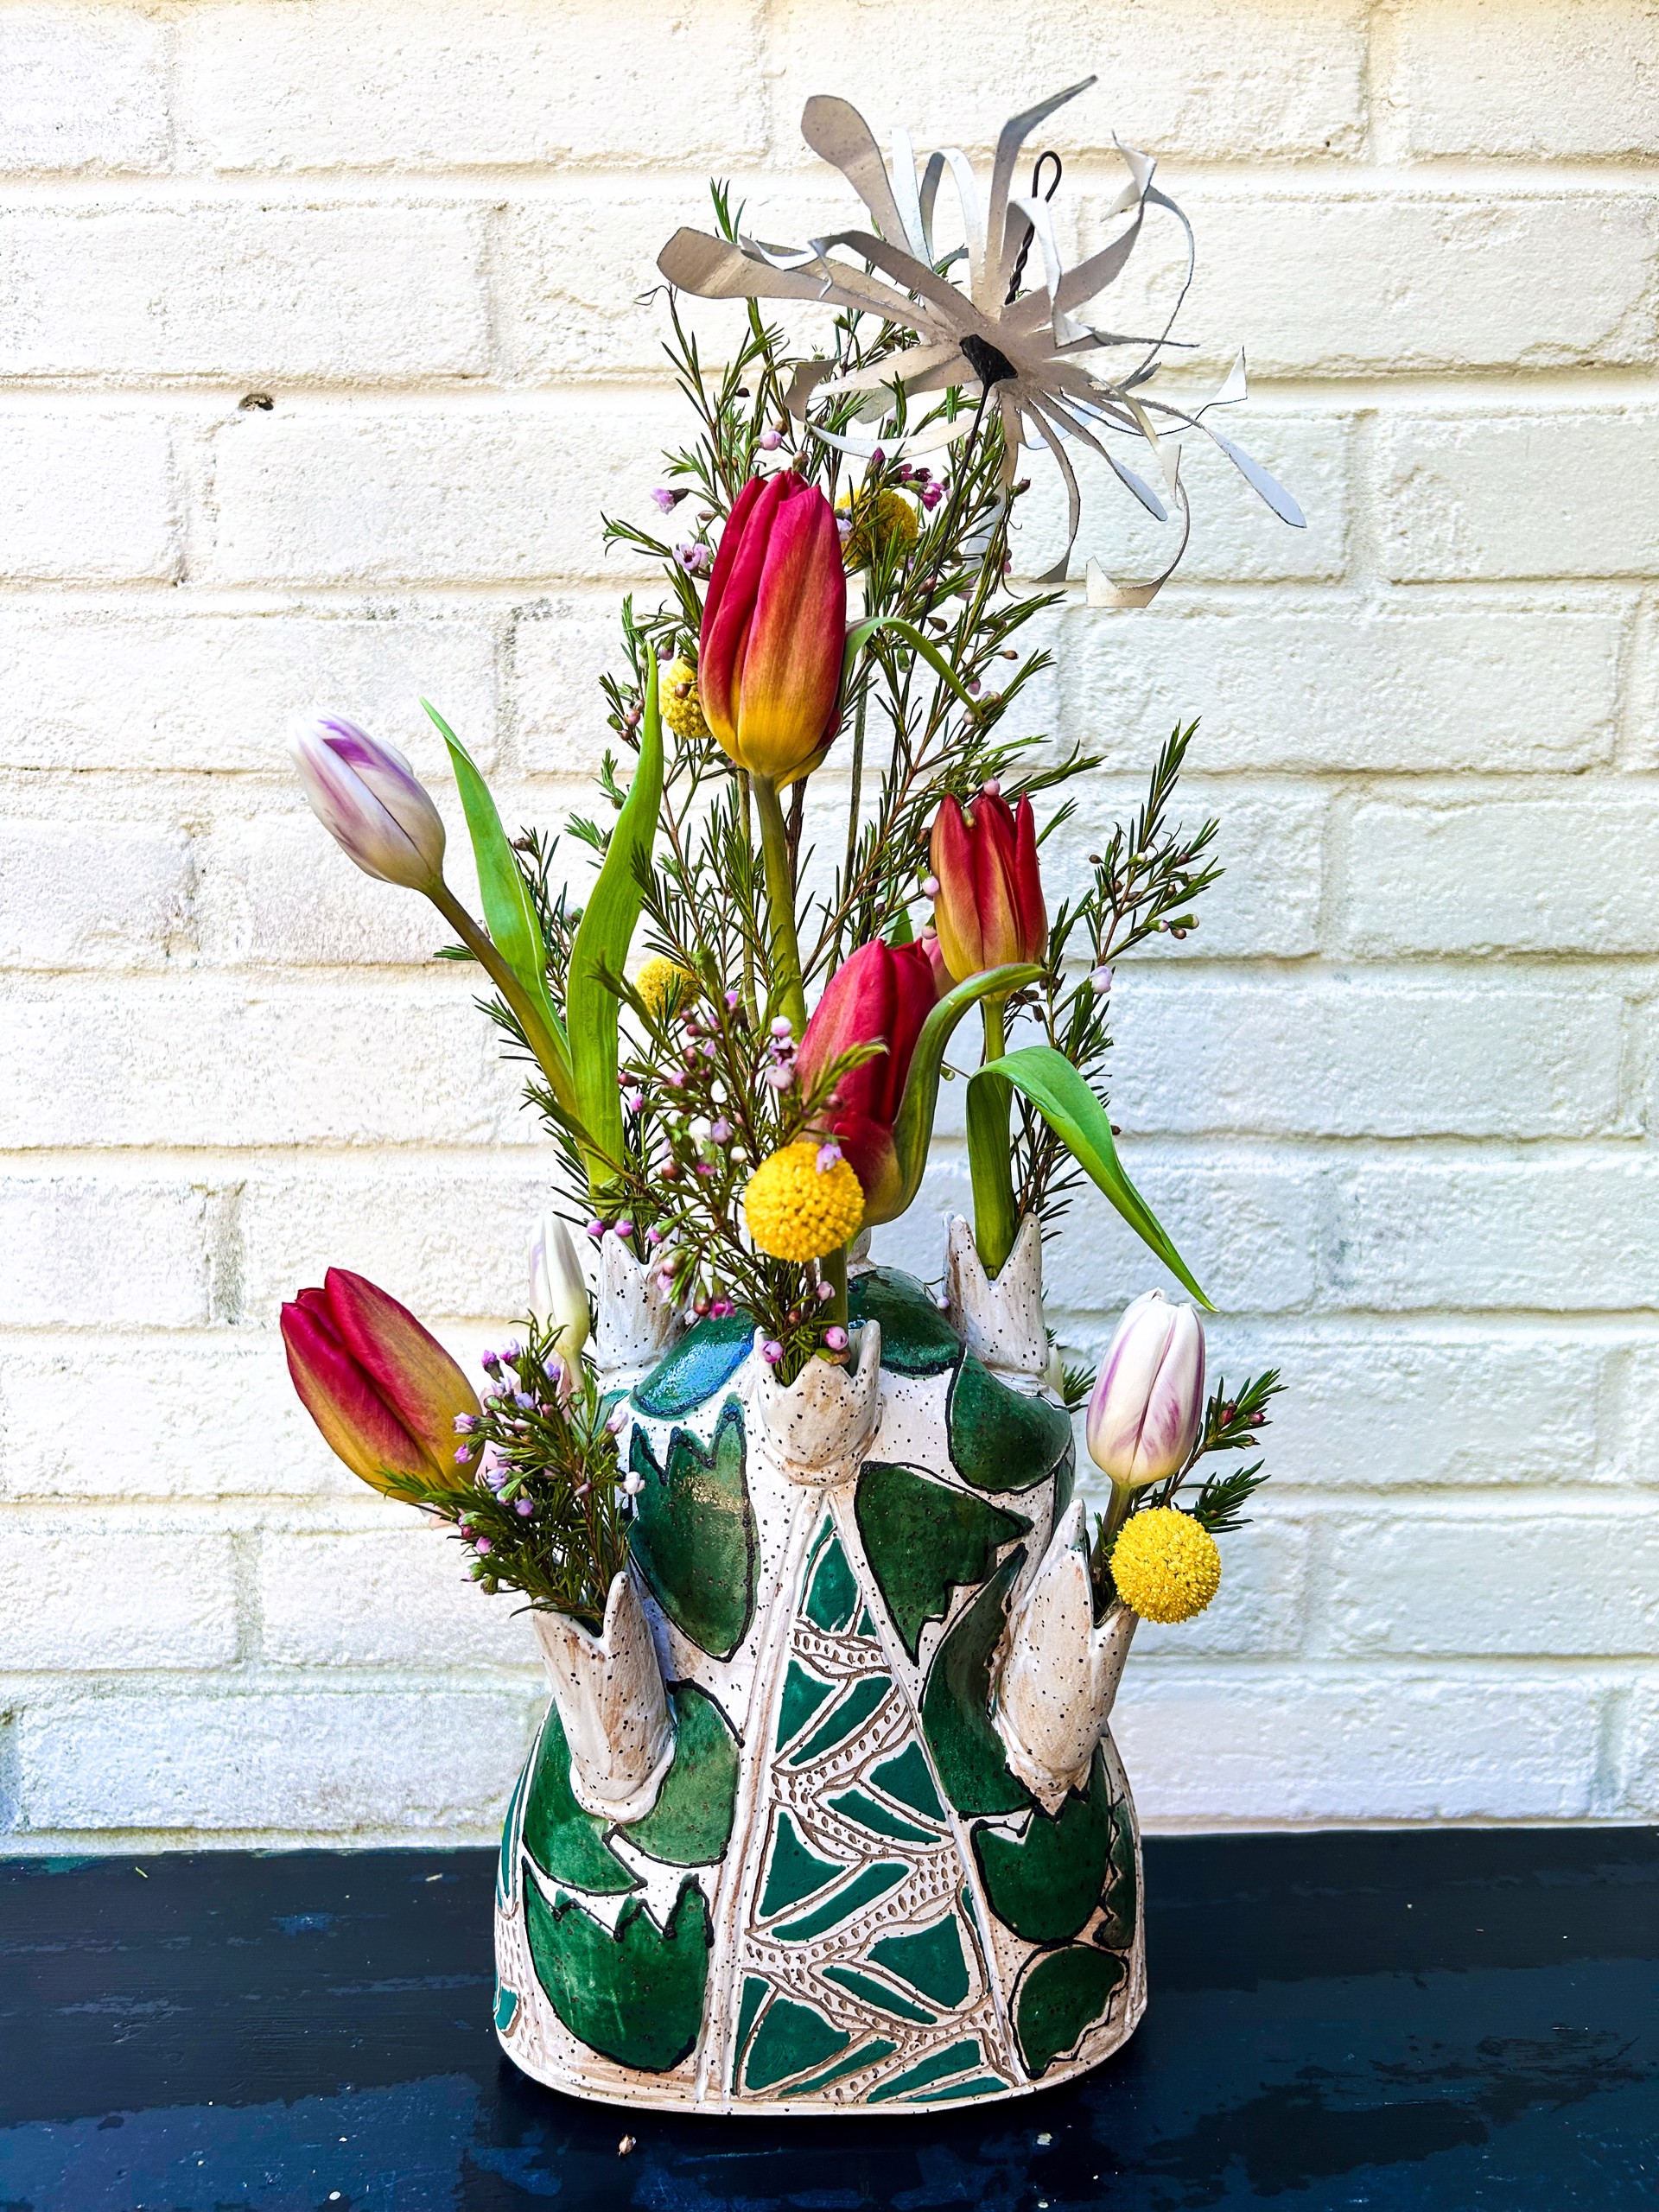 Flower Brick Green & White 2 by Annie Singletary